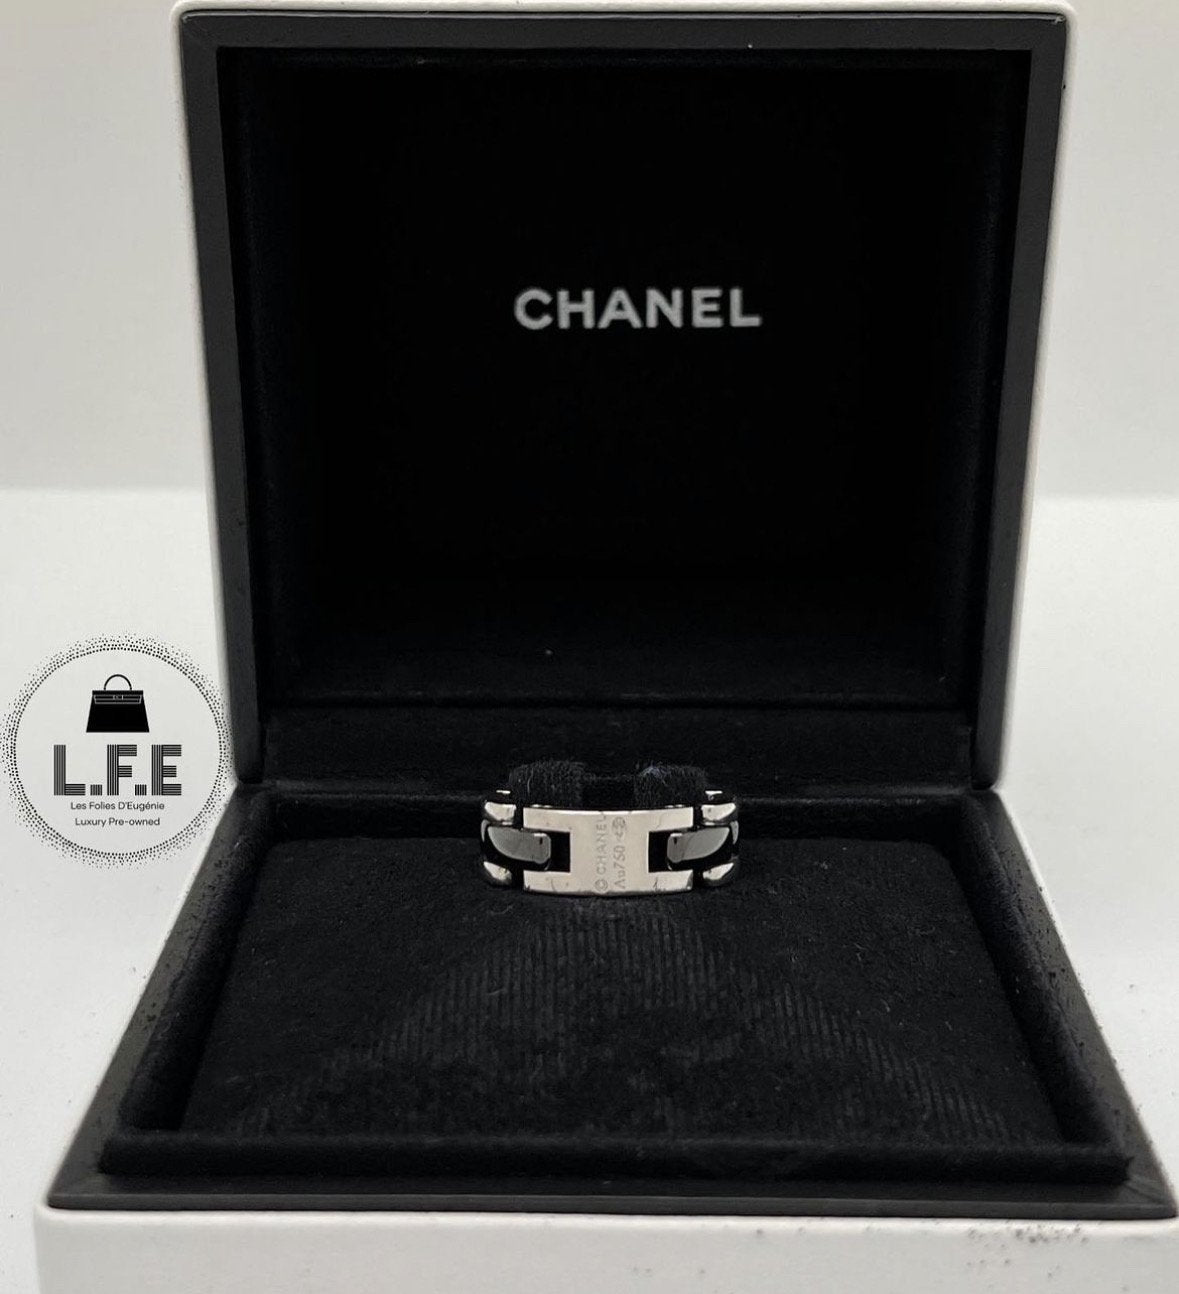 Chanel - Bague Ultra T54 - Les Folies d&